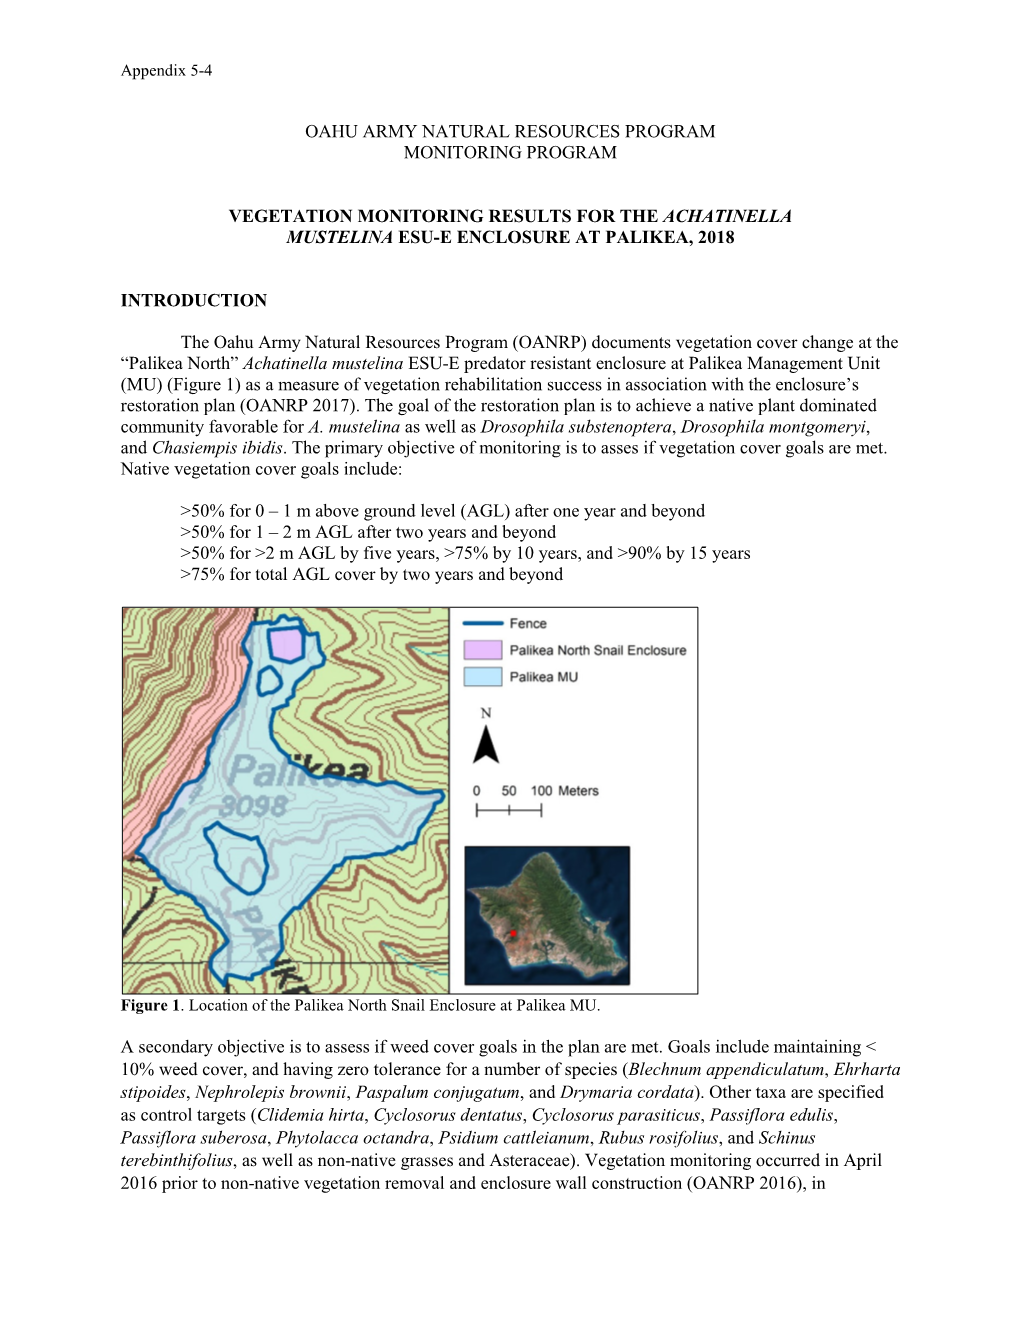 Appendix 5-4 Palikea North Snail Enclosure Vegetation Monitoring